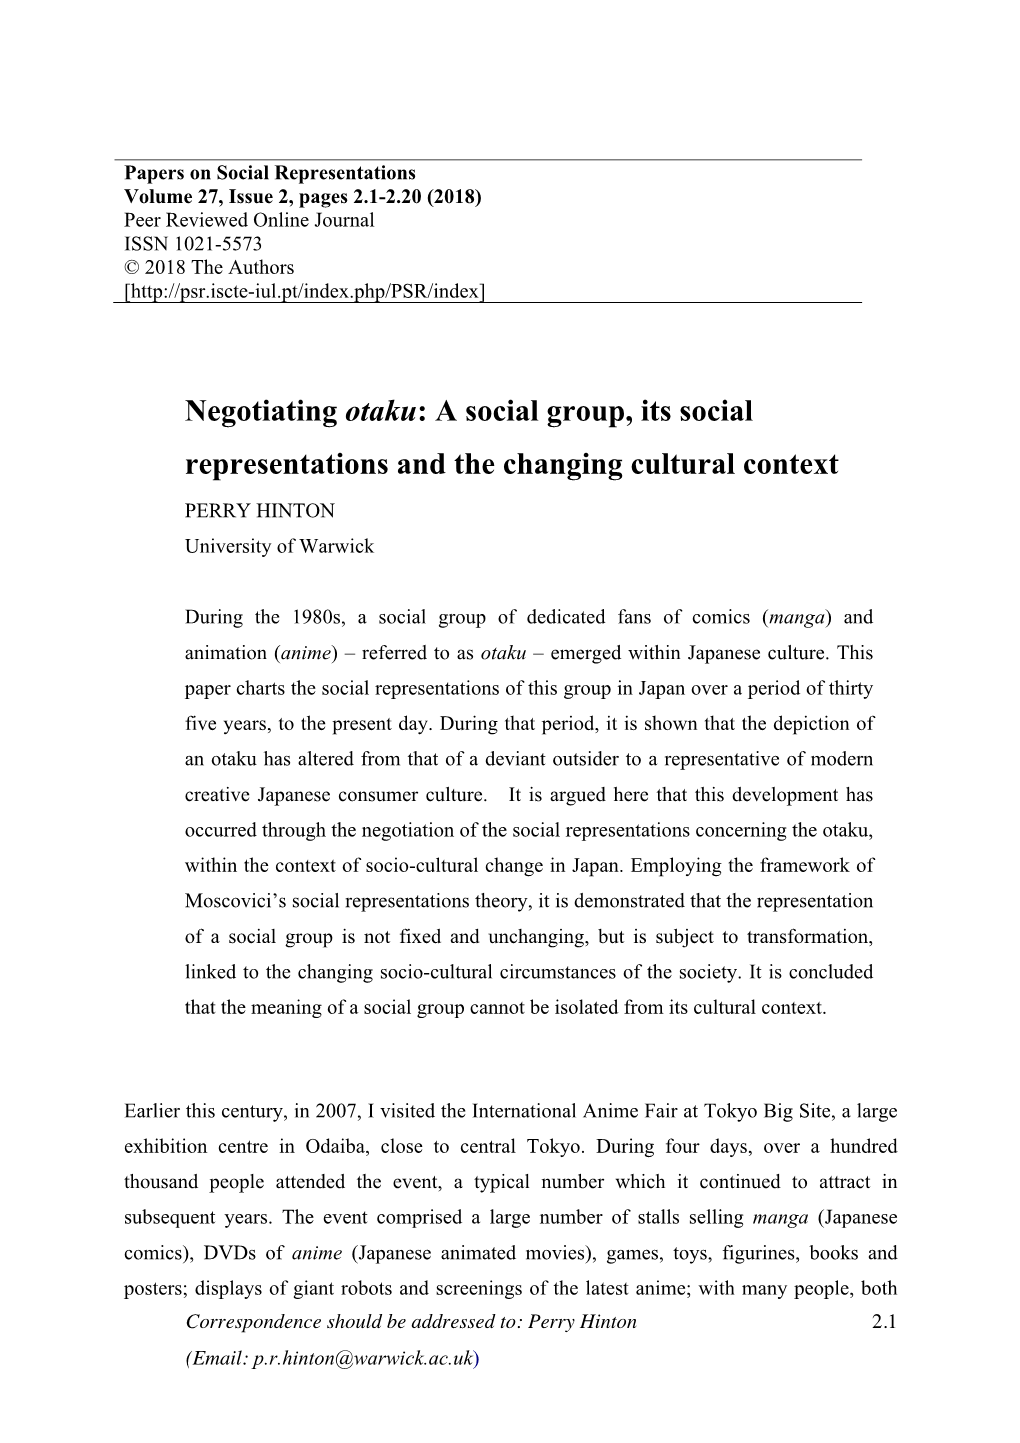 Negotiating Otaku: a Social Group, Its Social Representations and the Changing Cultural Context